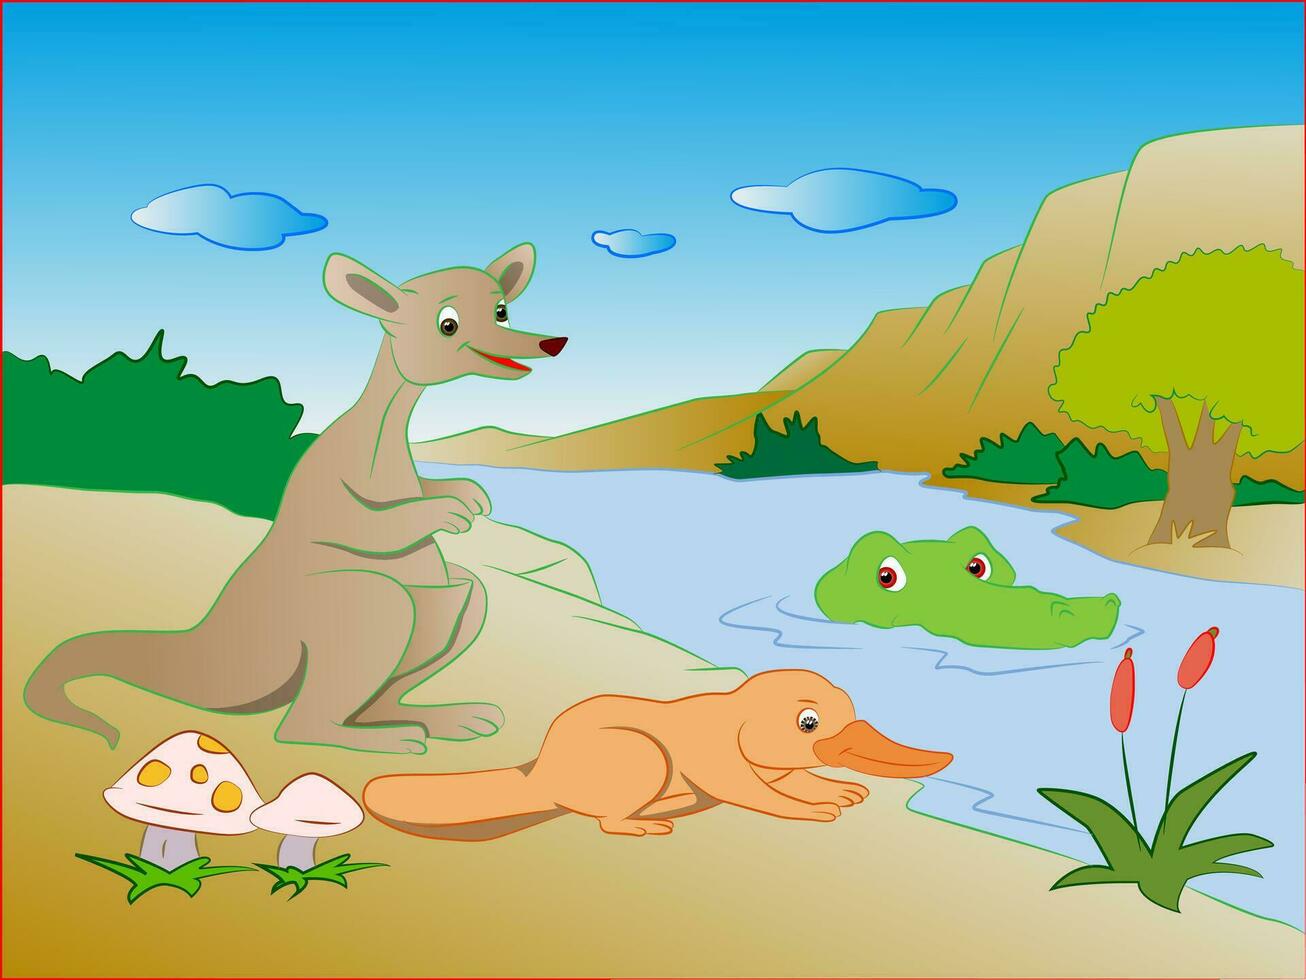 vetor do crocodilo dentro lago esgueirar-se em presa.